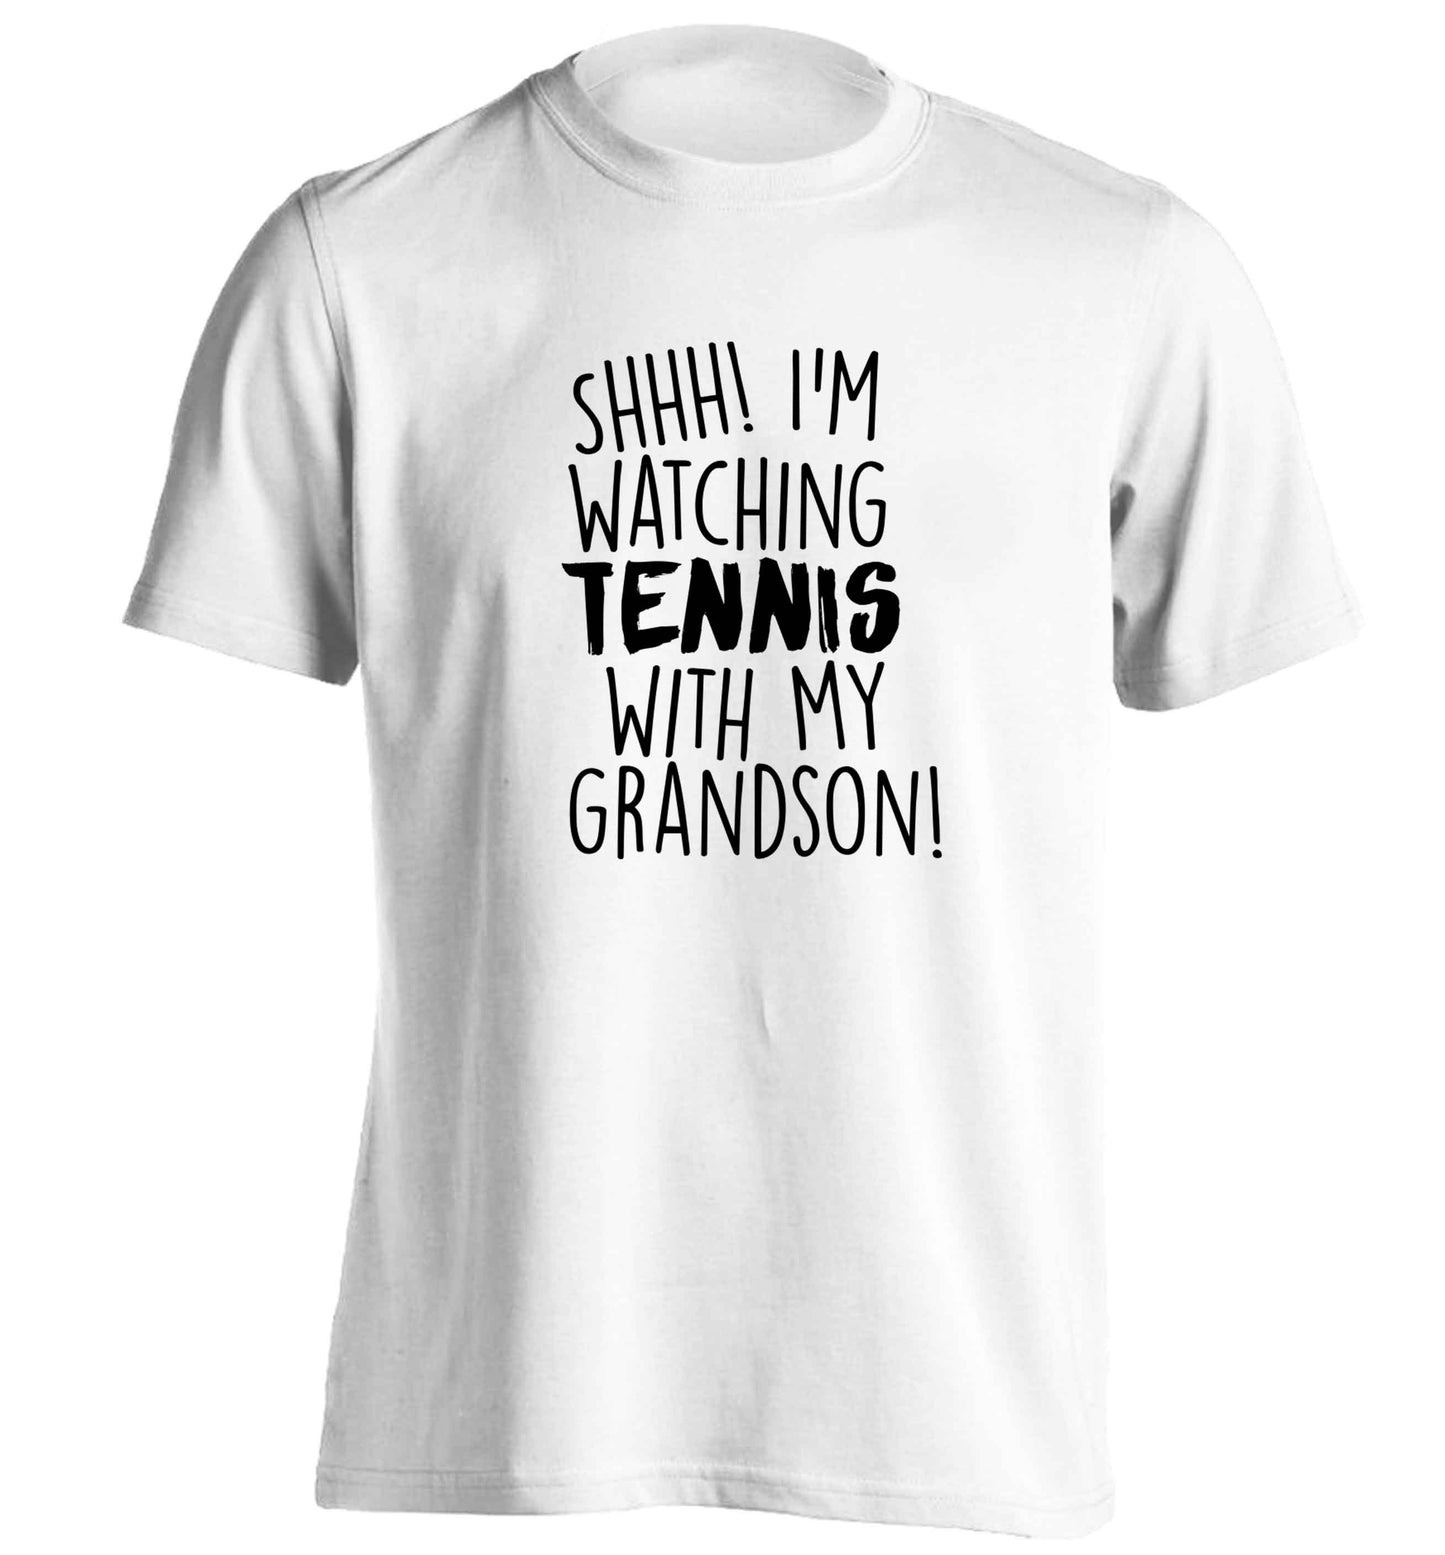 Shh! I'm watching tennis with my grandson! adults unisex white Tshirt 2XL